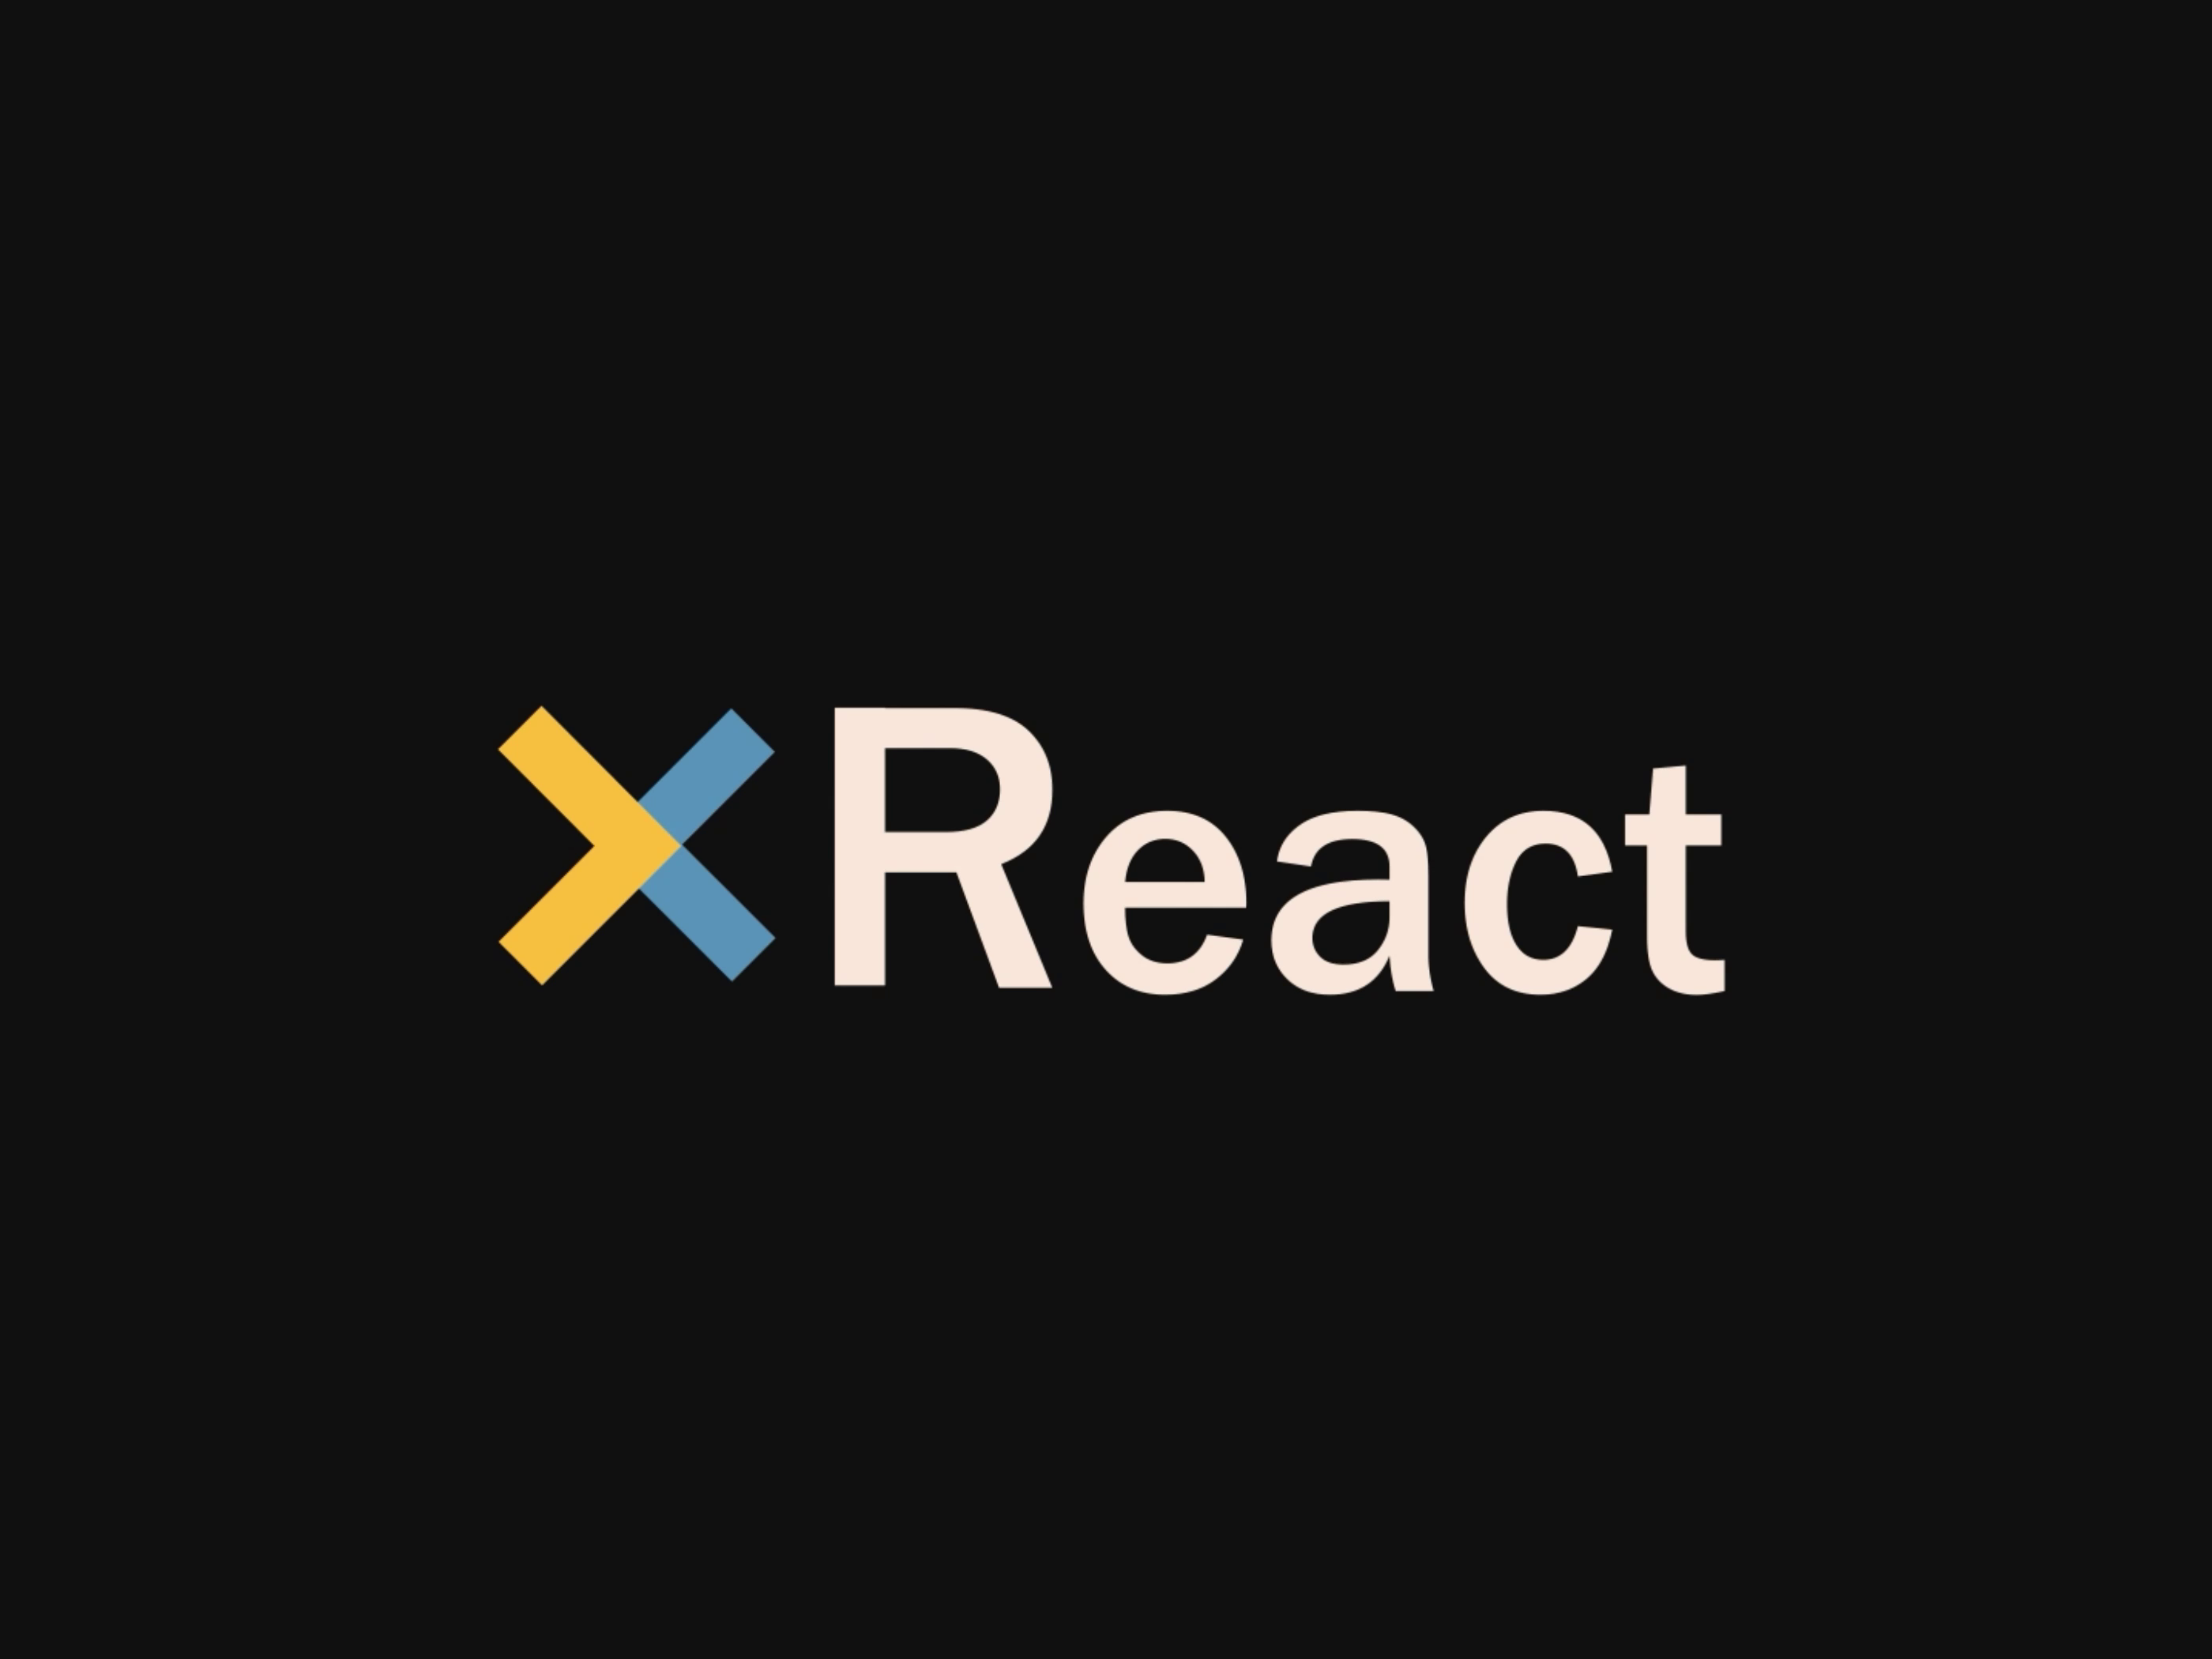 React Logo PNG Transparent & SVG Vector - Freebie Supply